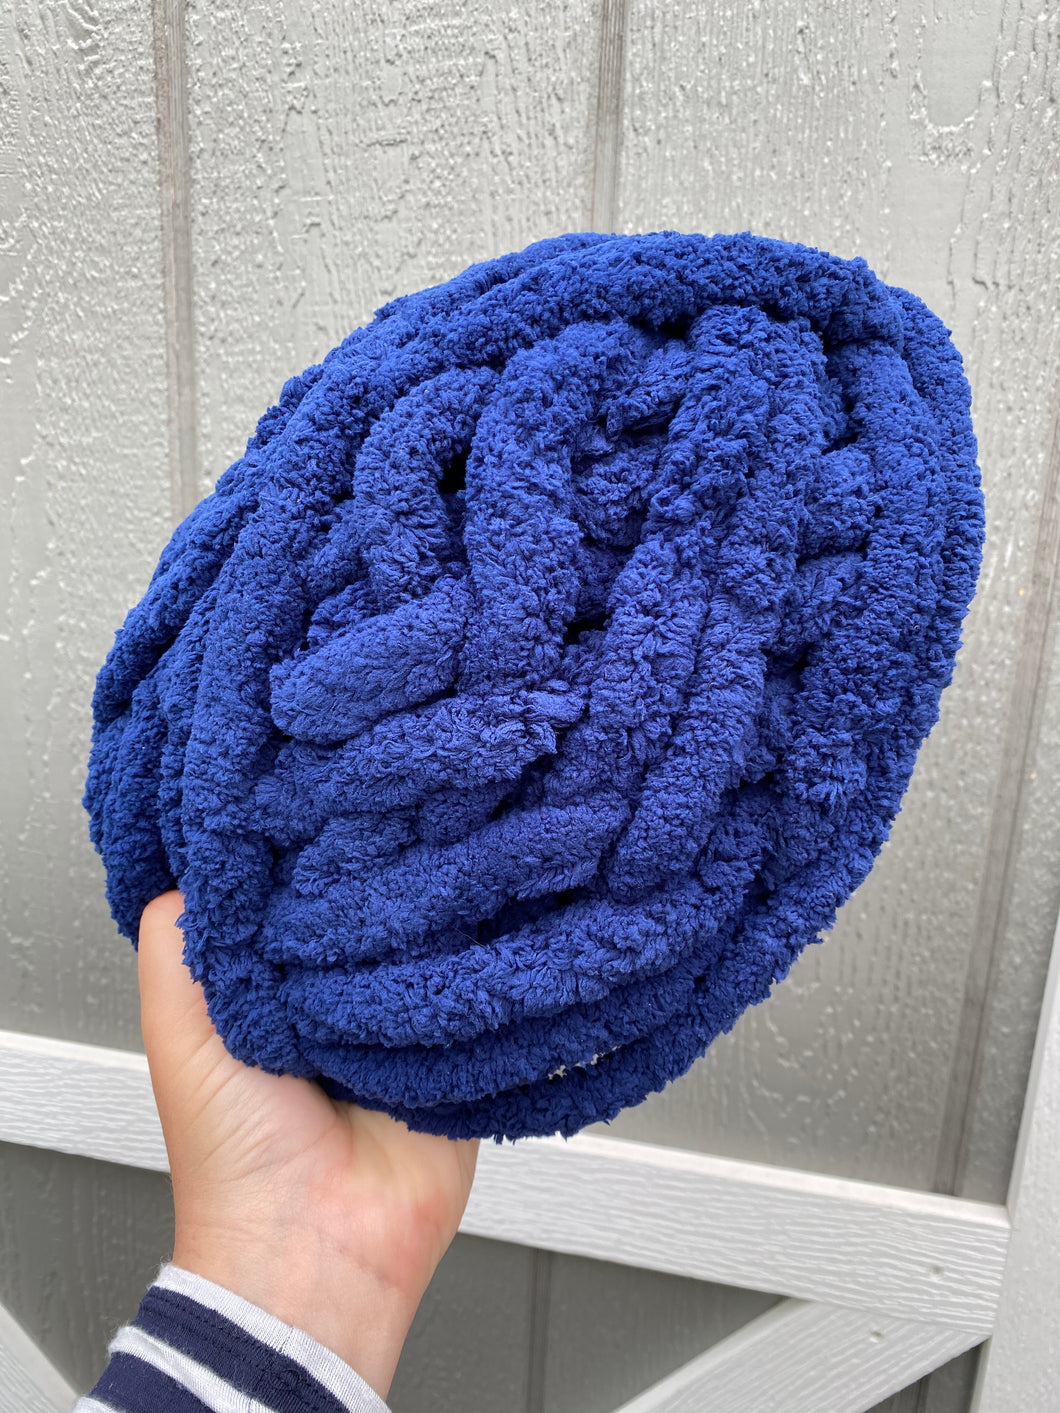 Navy Blue Chunky Knit Yarn